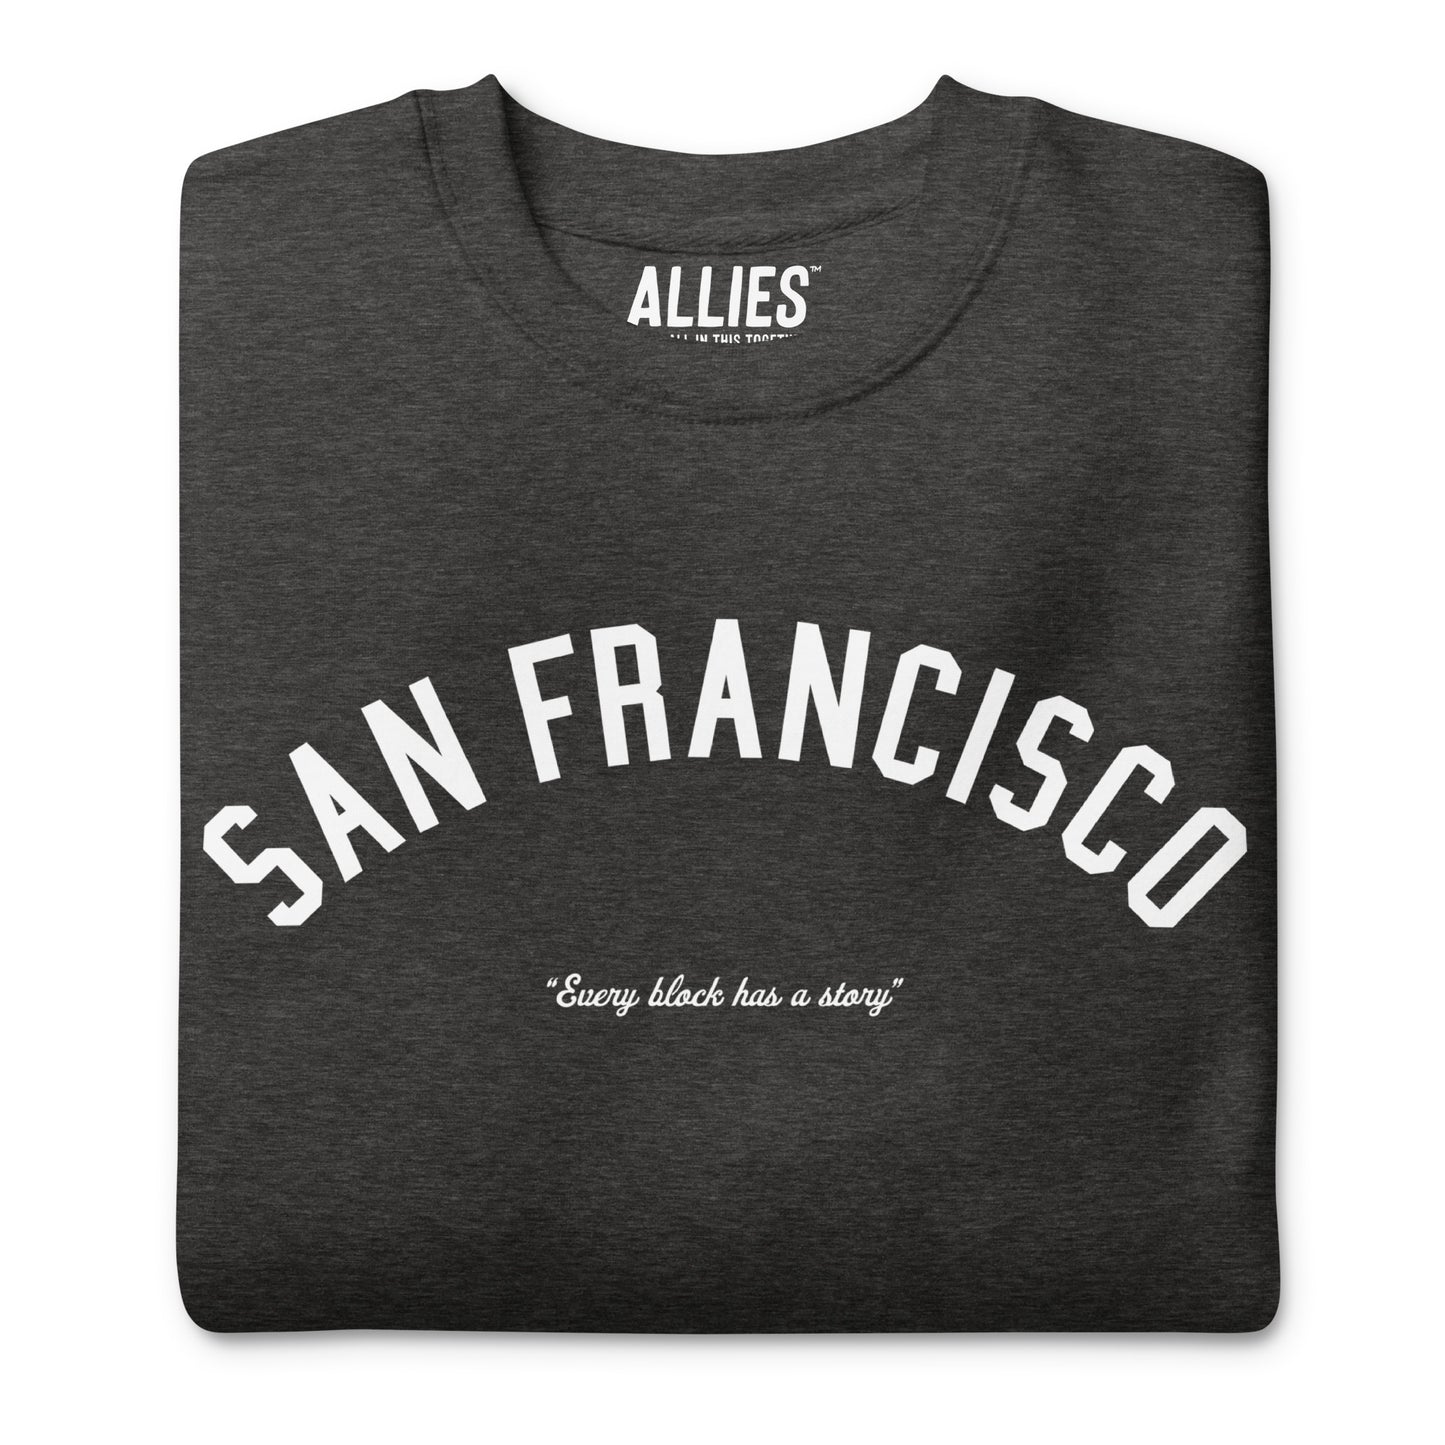 San Francisco Story Sweatshirt